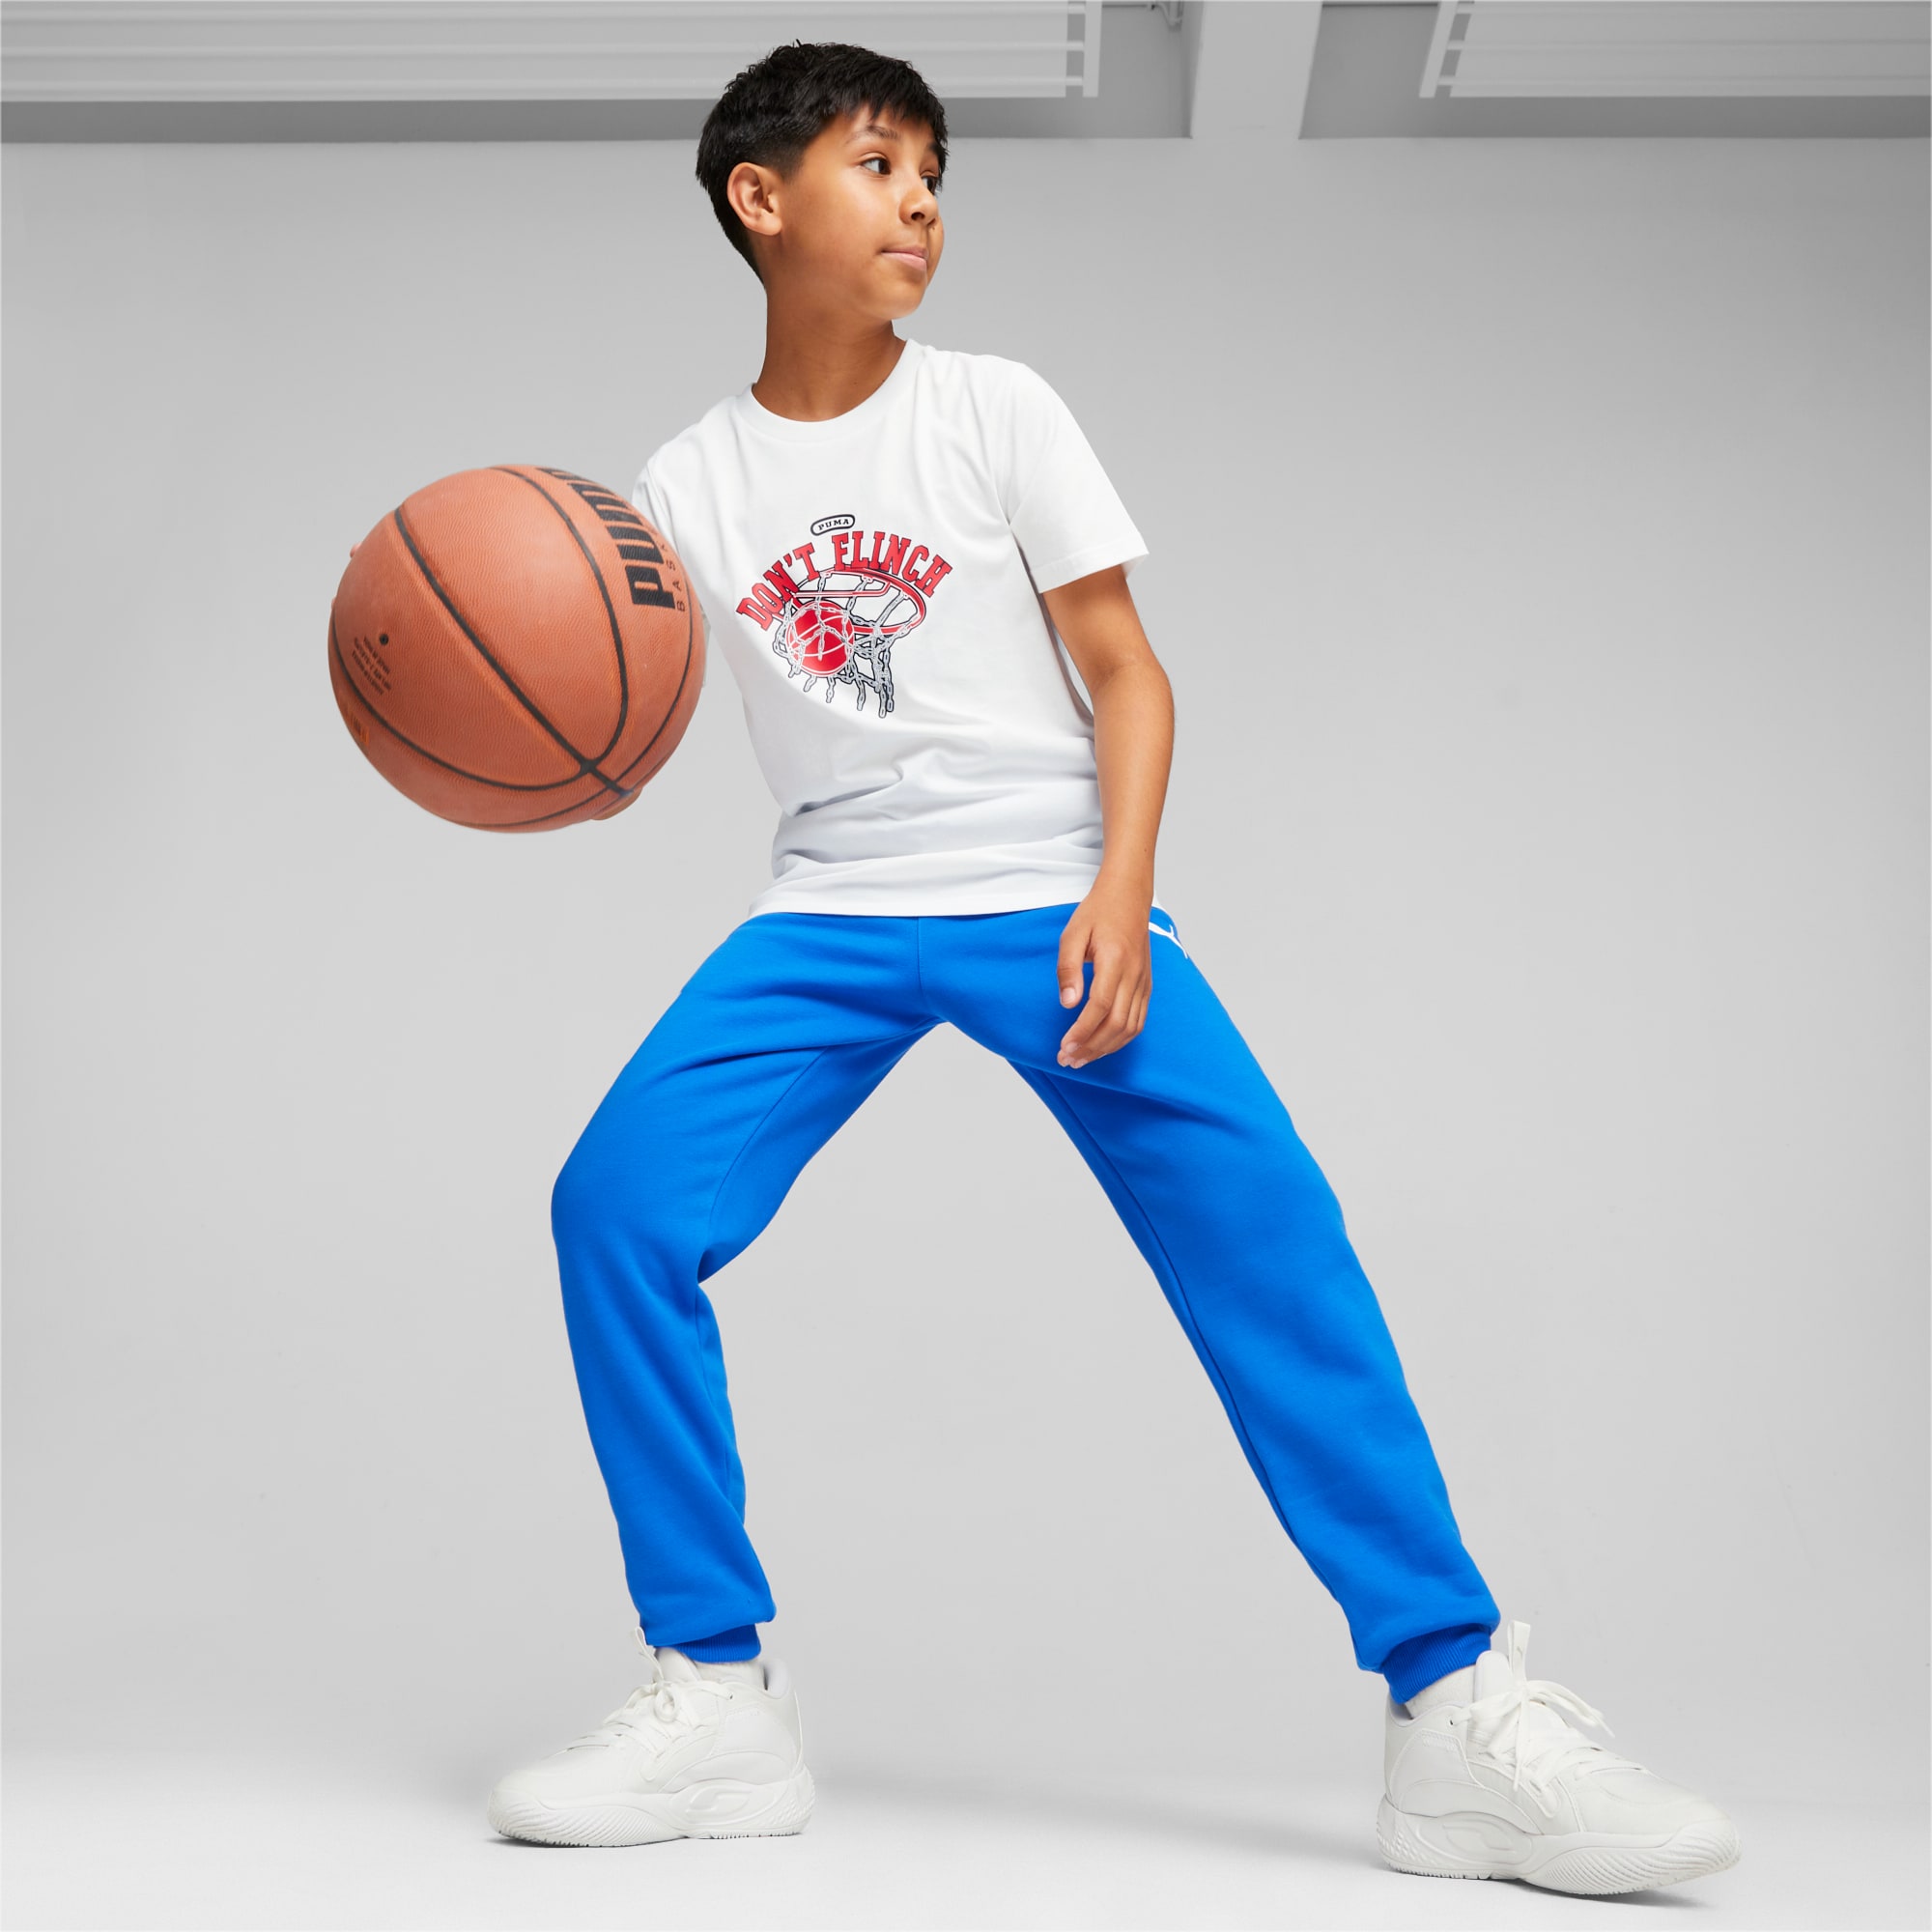 PUMA Basketball Graphic Youth T-Shirt, White